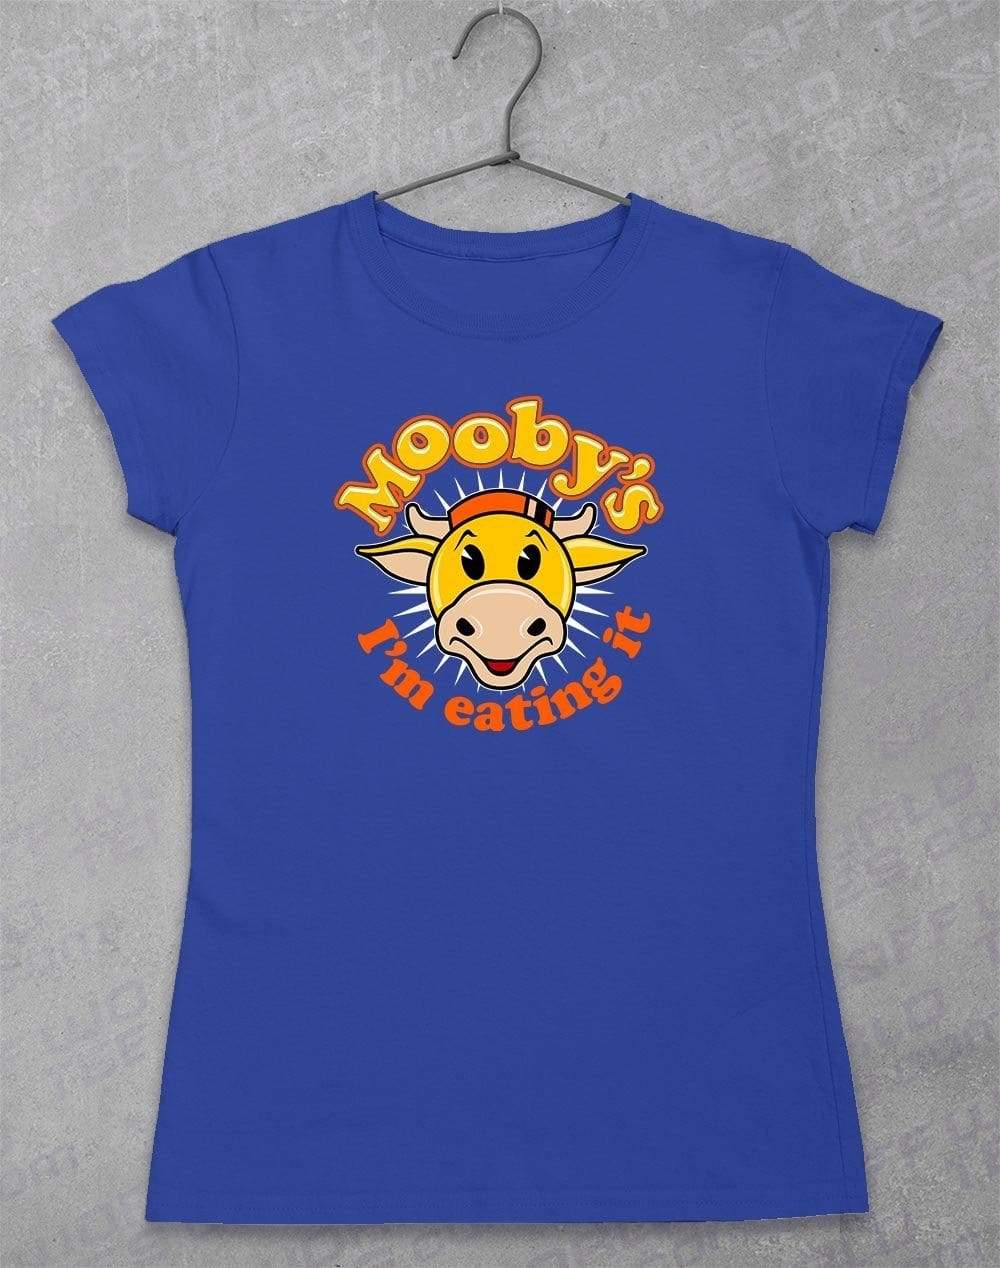 Moobys Women's T-Shirt 8-10 / Royal  - Off World Tees